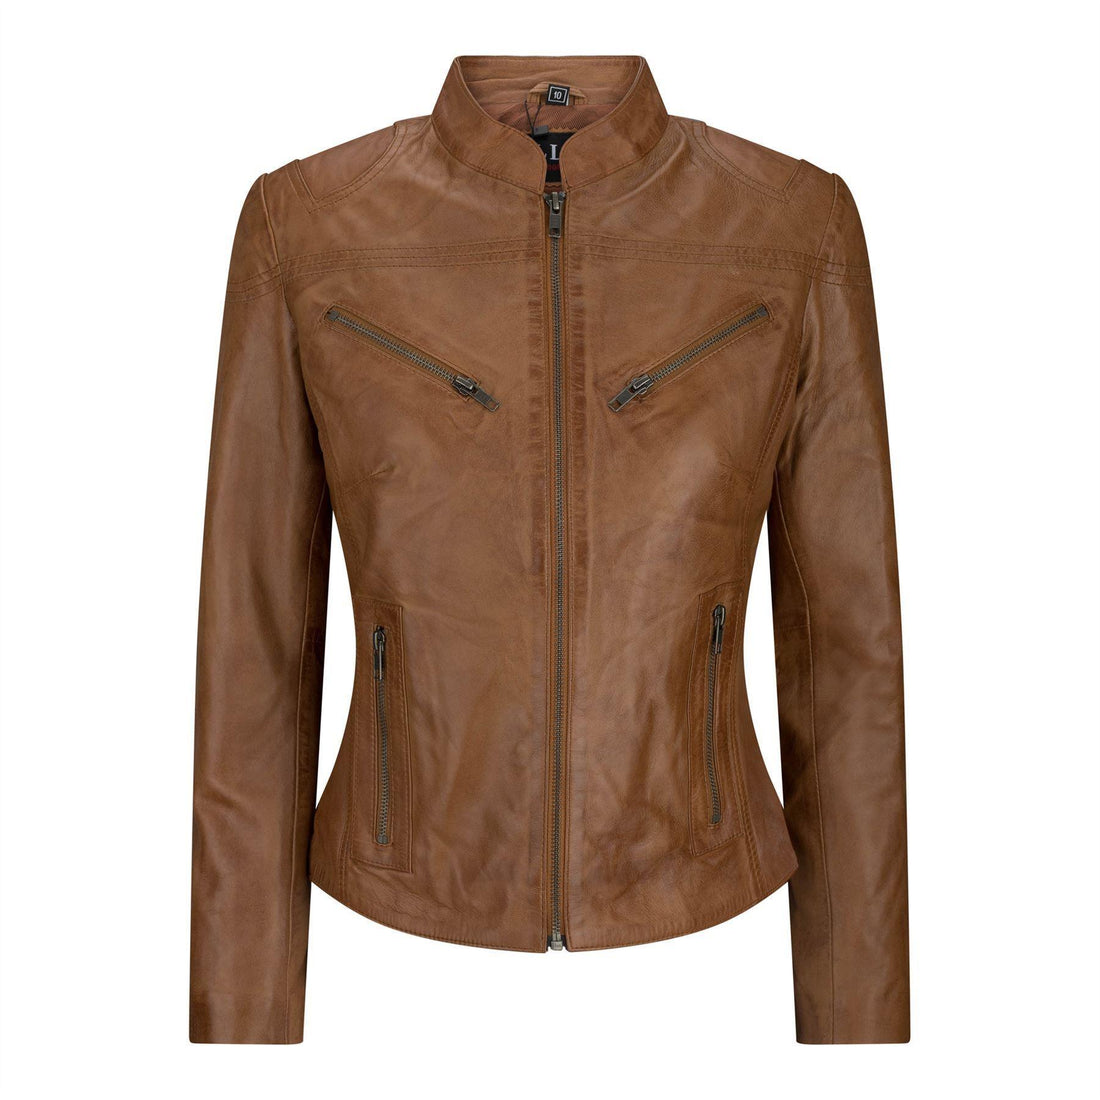 Ladies Real Leather Tan Biker Style Fashion Jacket Size UK 6-20 - Knighthood Store